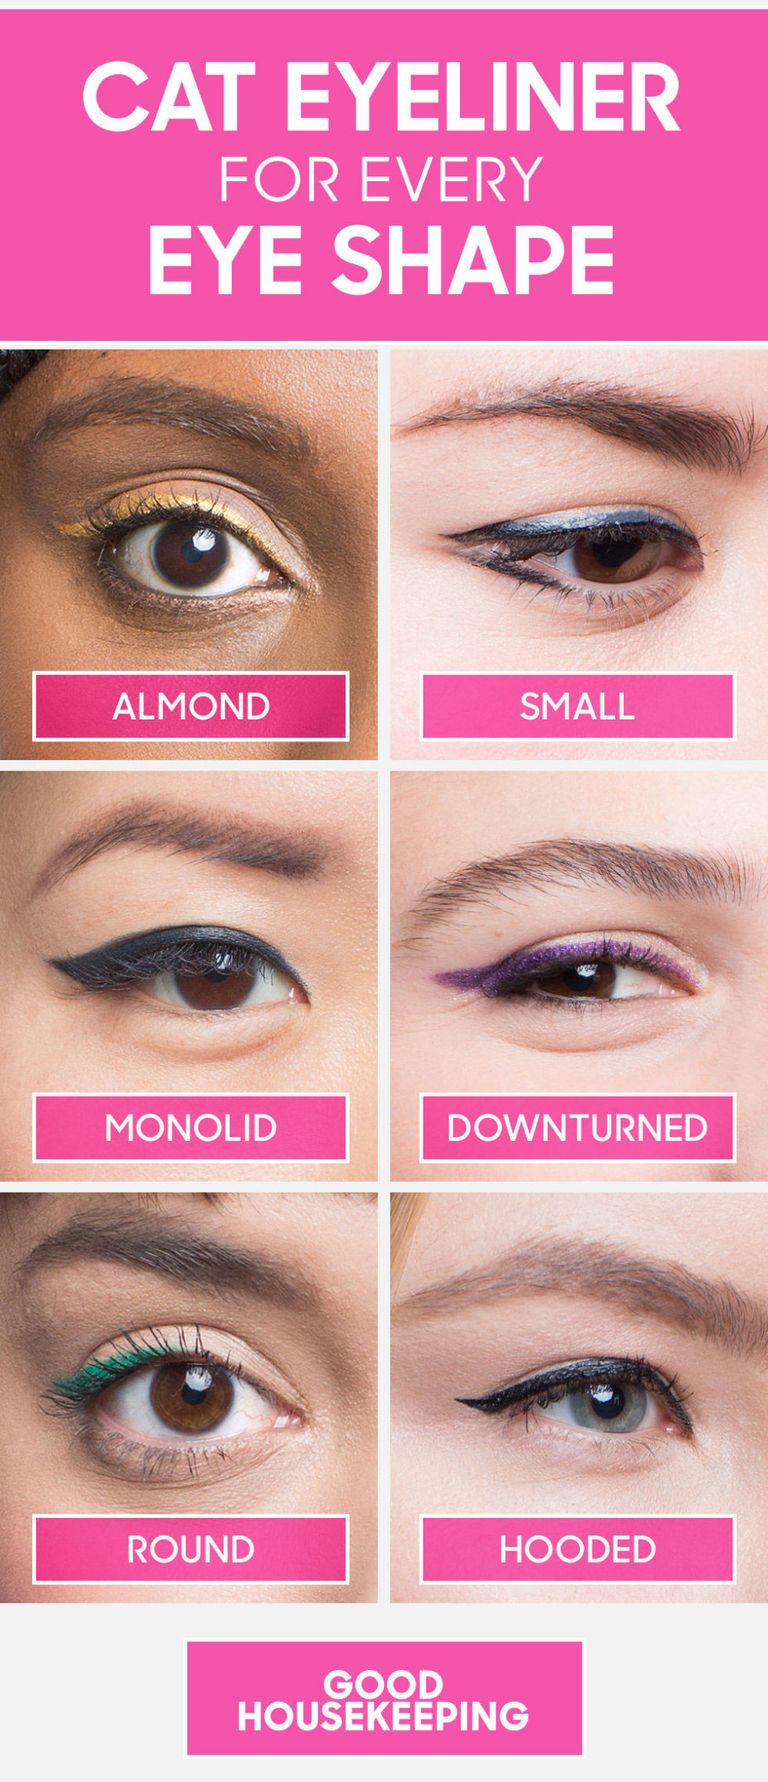 How to Do Winged Eyeliner for Every Eye Shape — Cat Eyeliner Tutorial